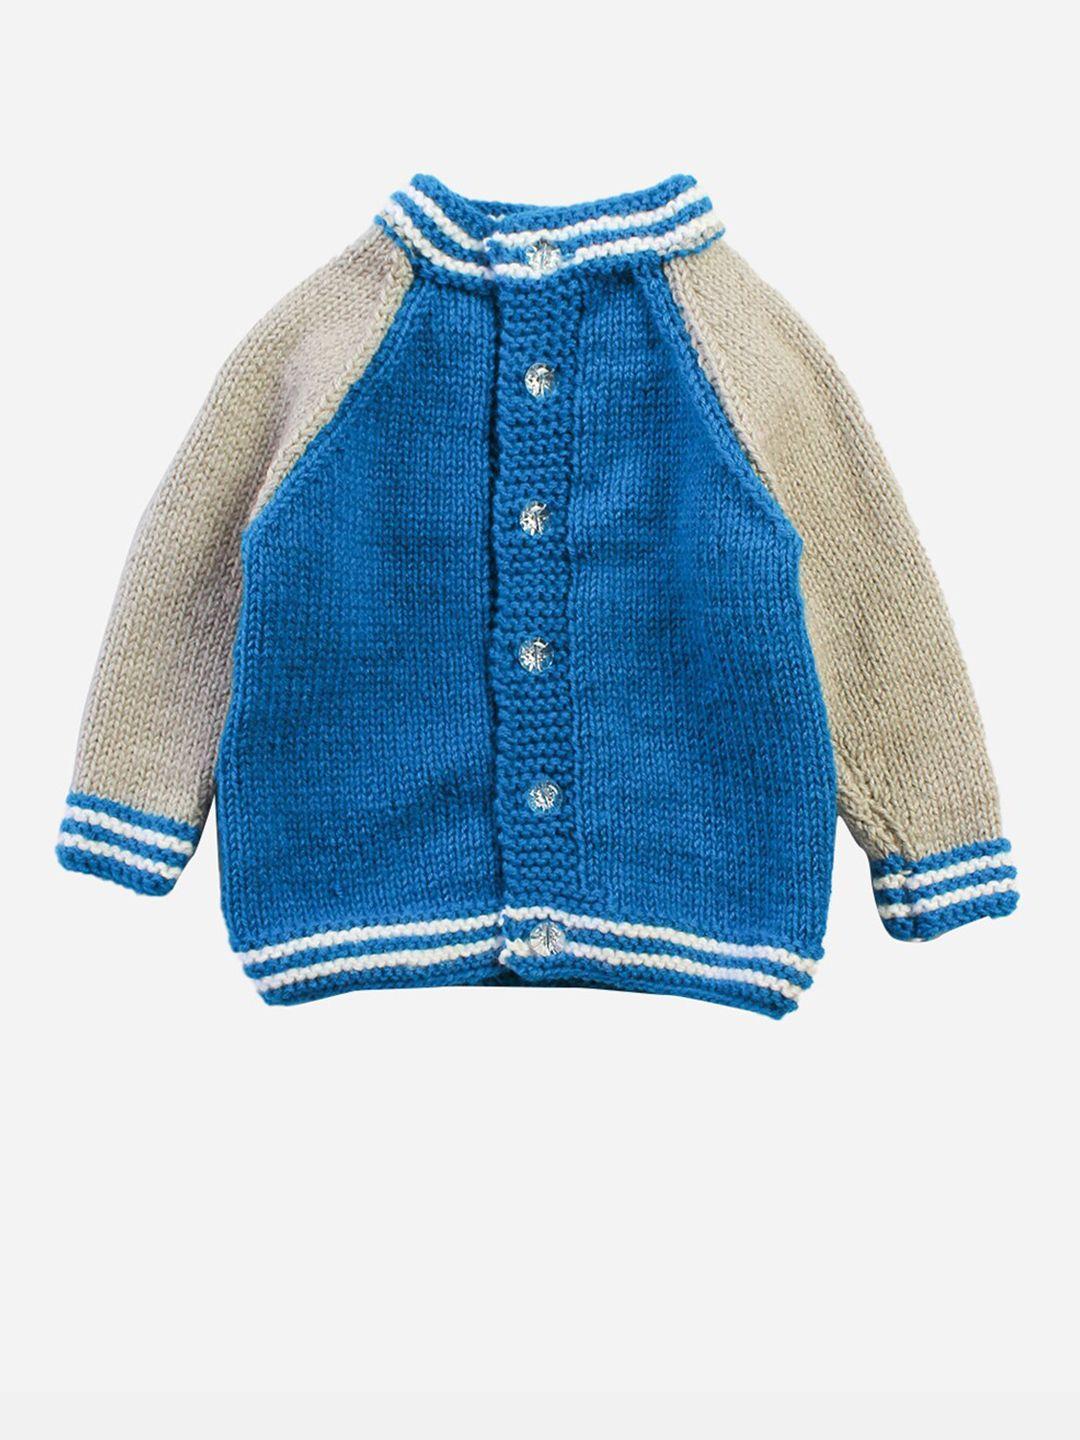 woonie-unisex-kids-blue-colourblocked-cardigan-sweater